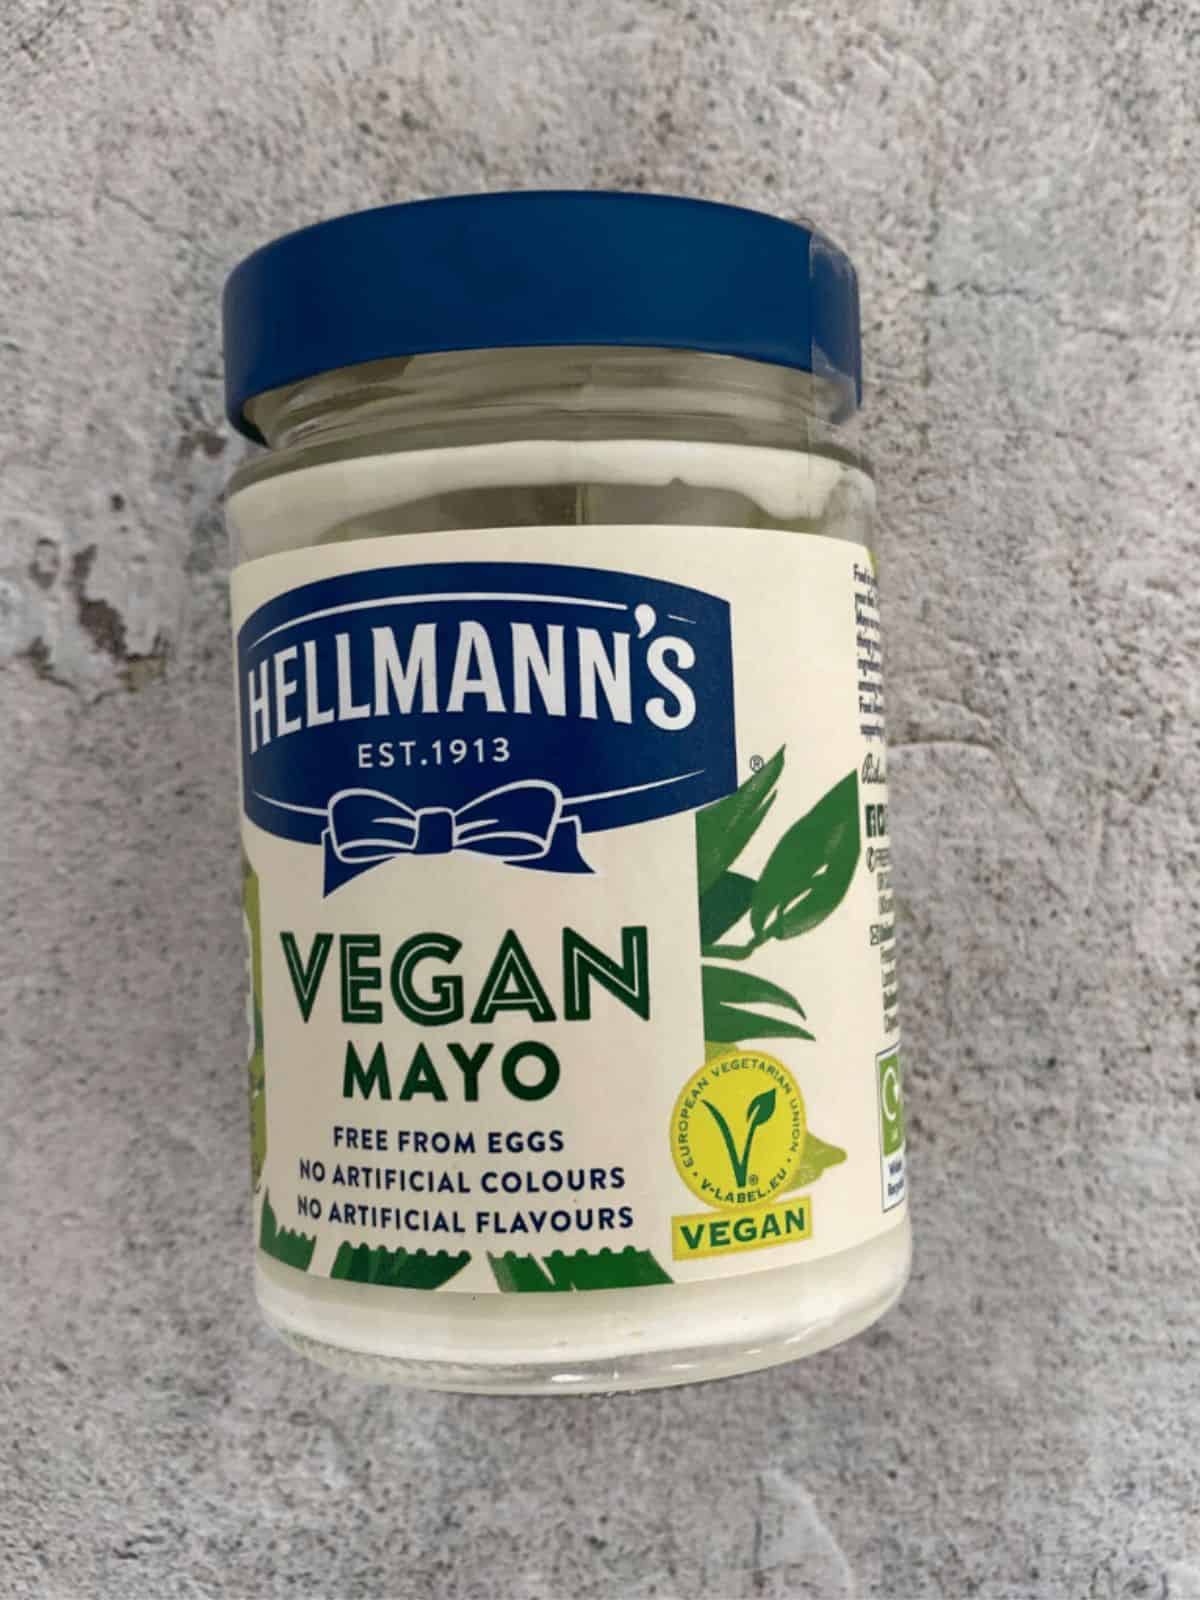 Jar of Hellman's vegan mayo.